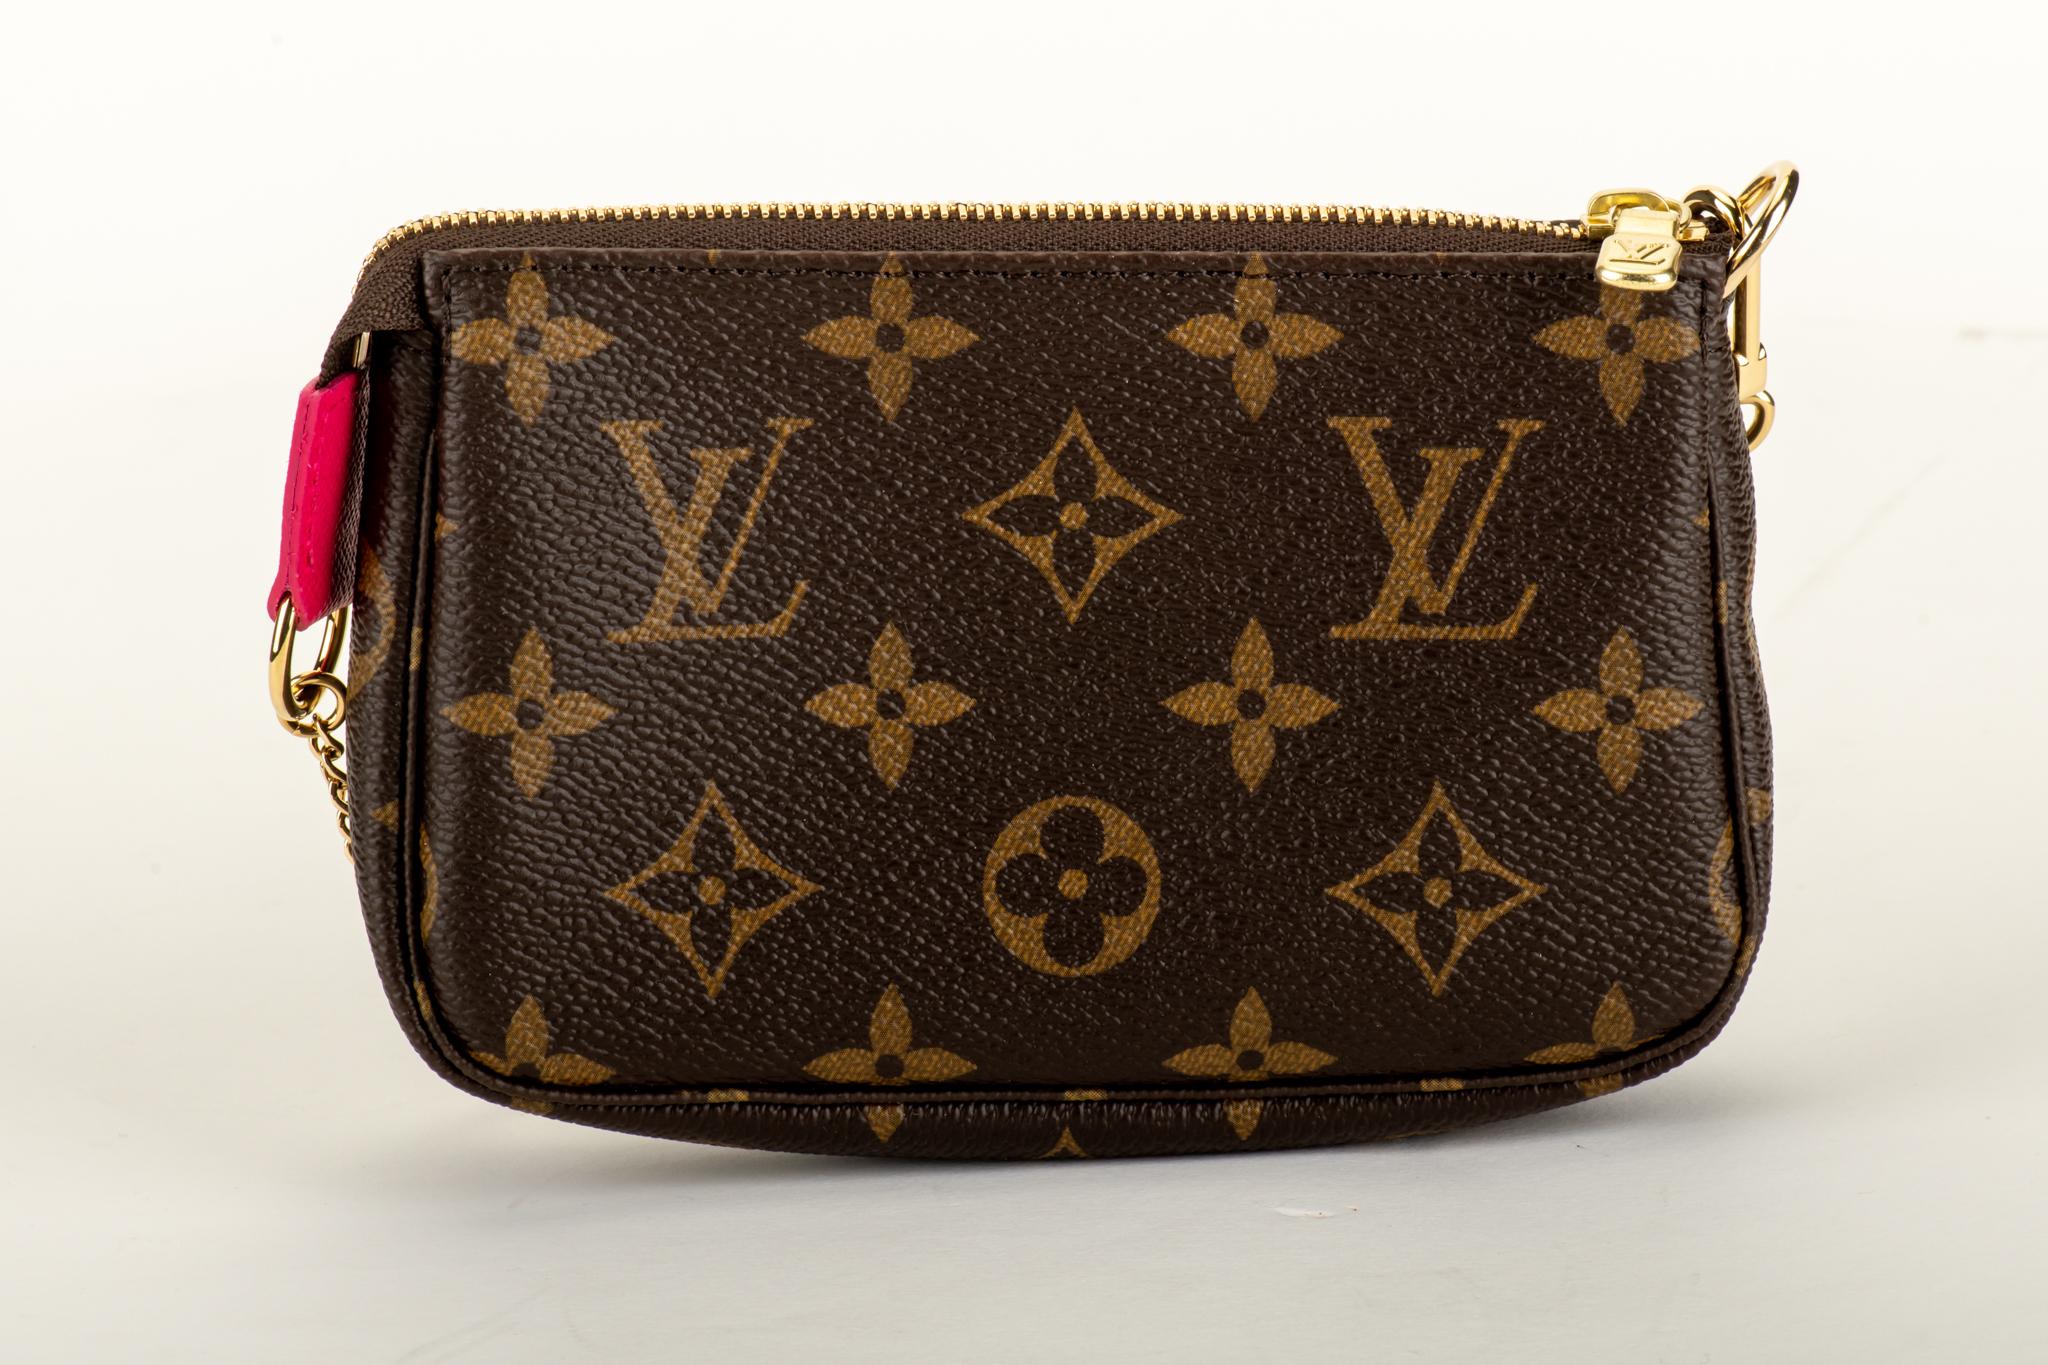 Black New in Box Louis Vuitton Christmas Limited Edition Megeve Pouchette Bag